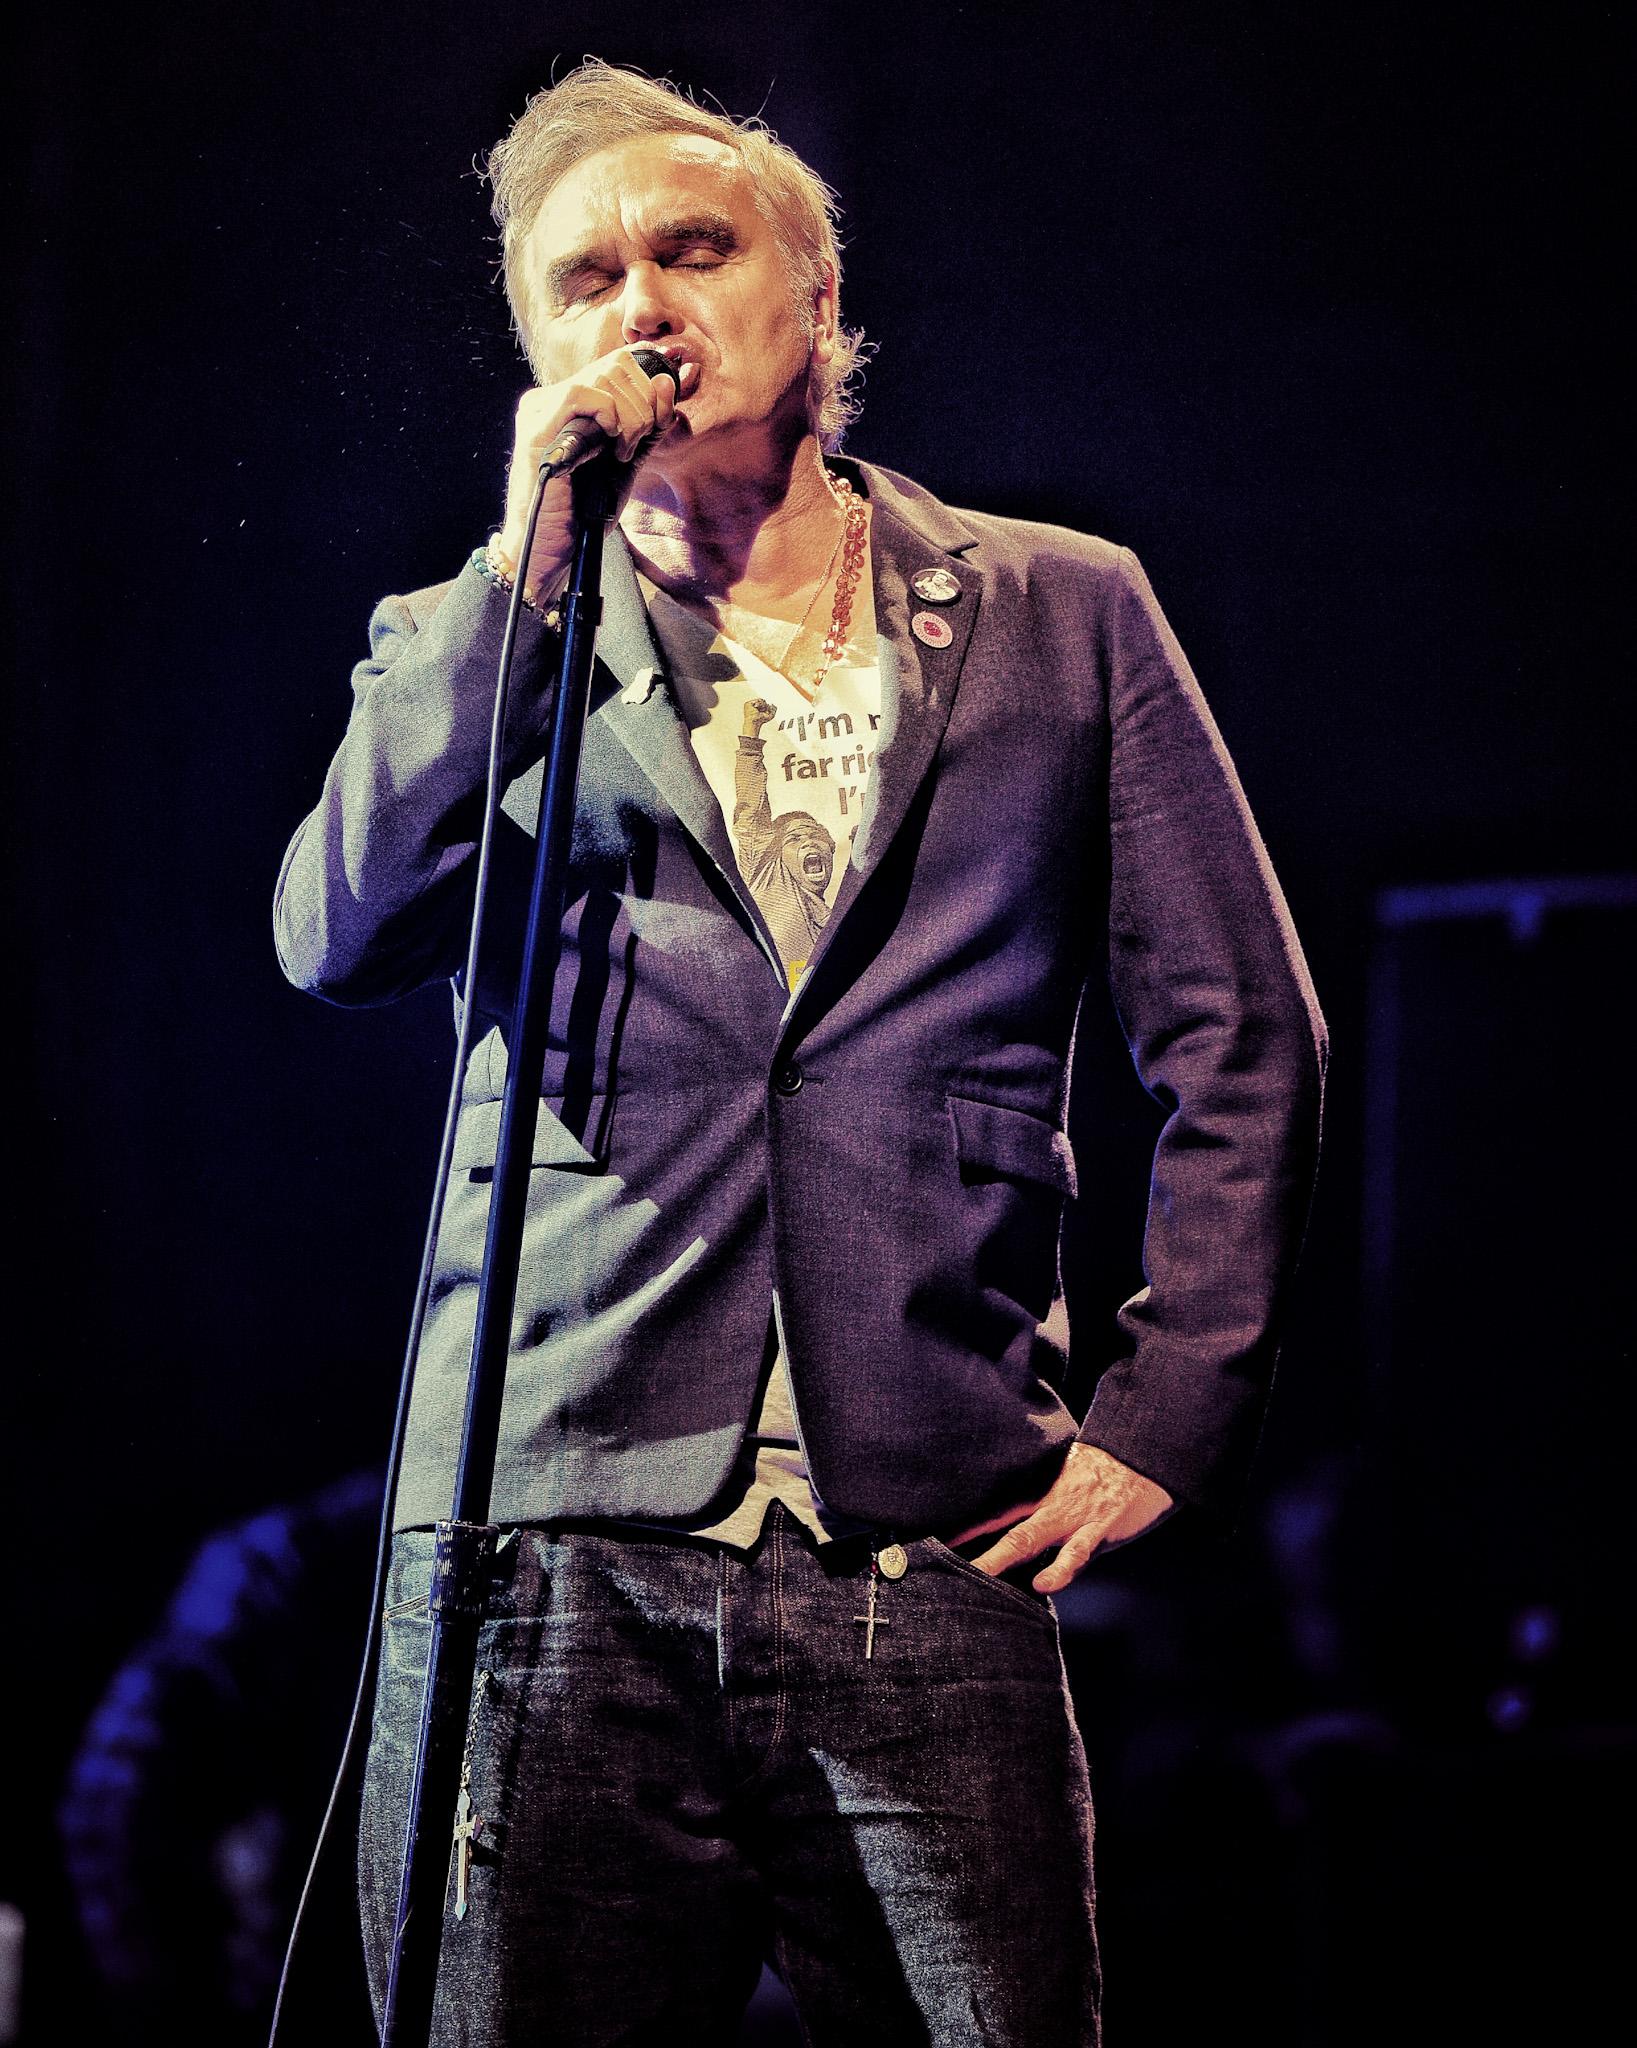 Morrissey performs at Wembley Arena in London